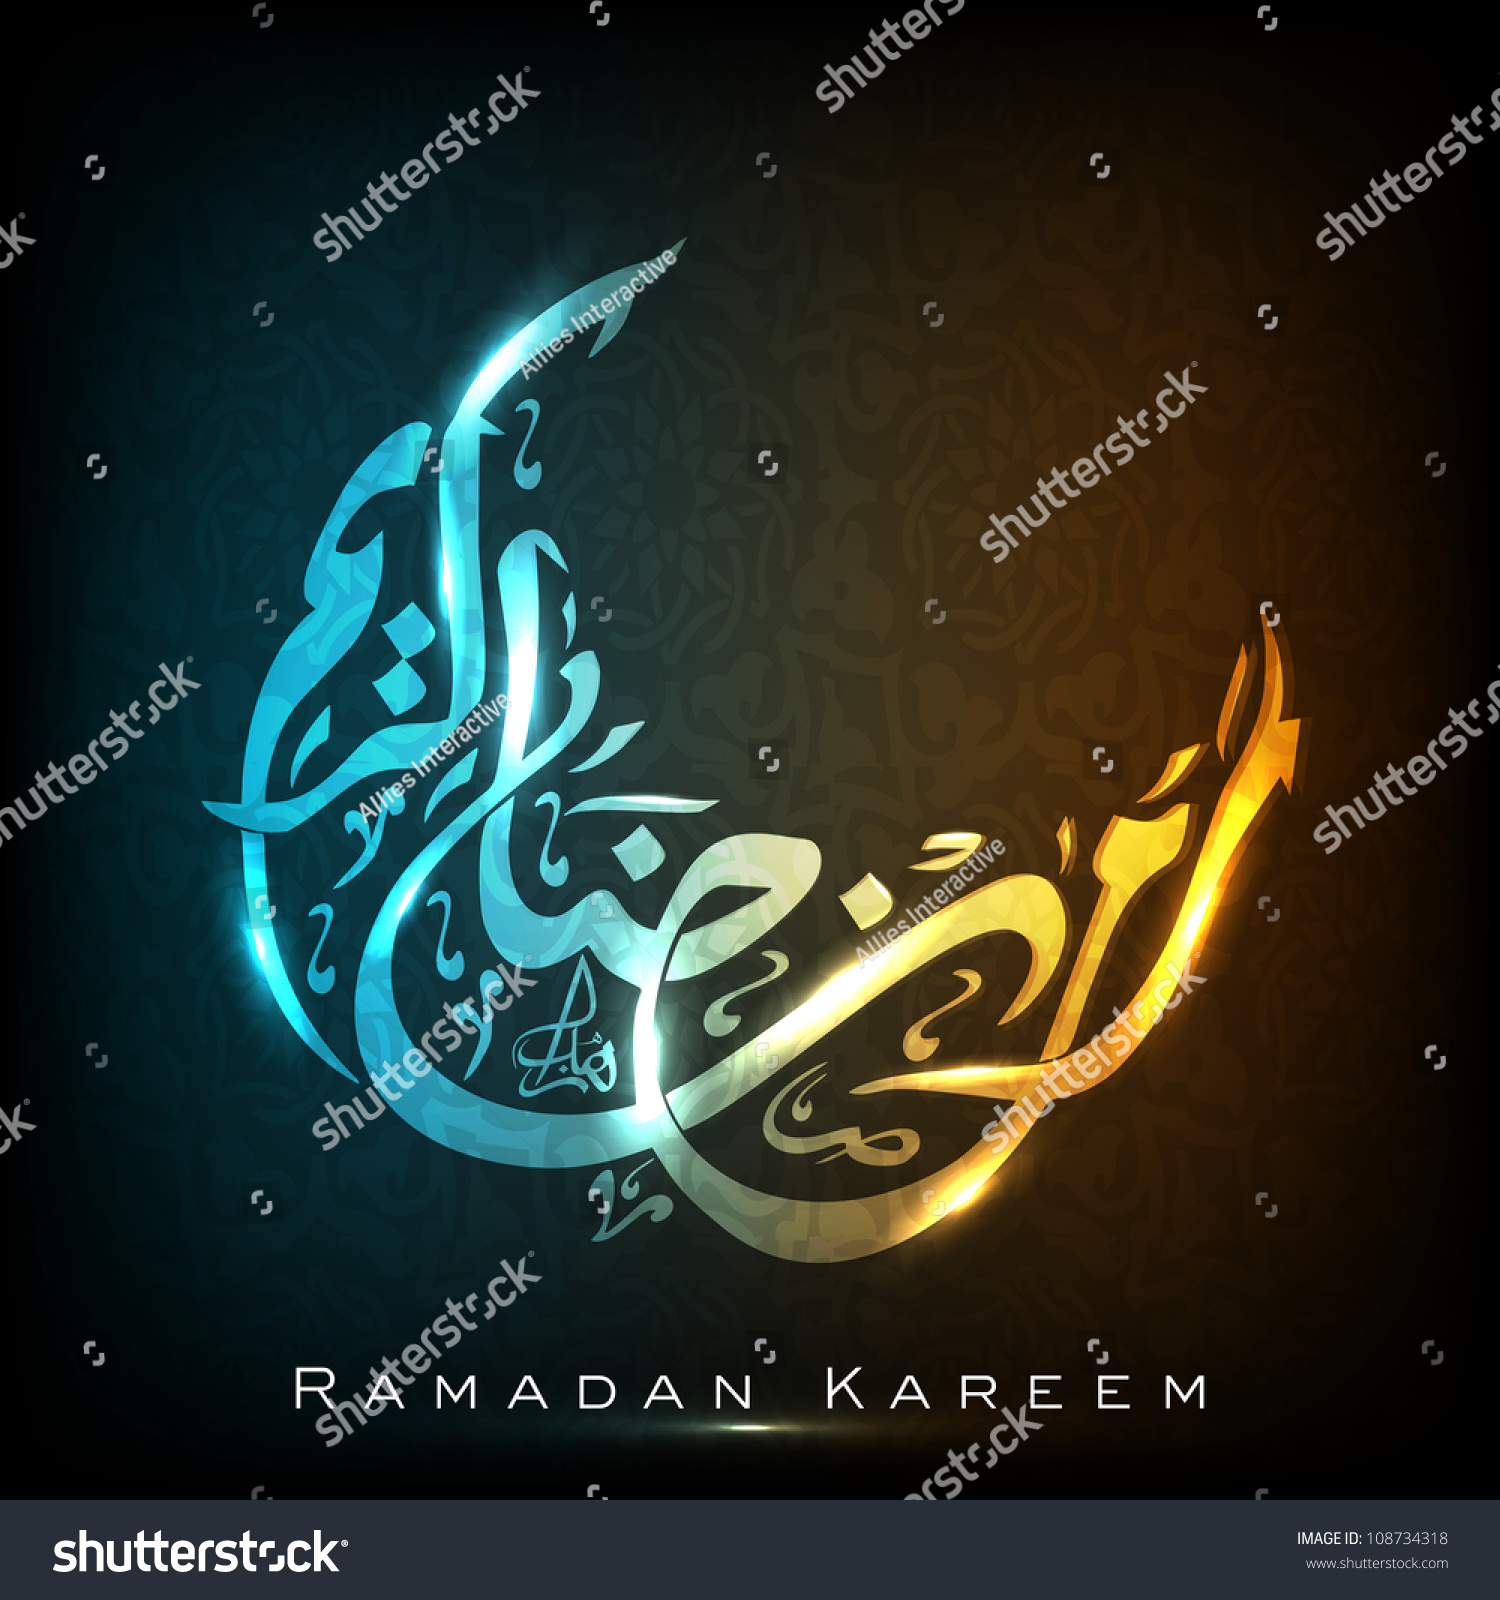 Arabic Islamic Calligraphy Of Ramazan Kareem Or Ramadan Kareem Text